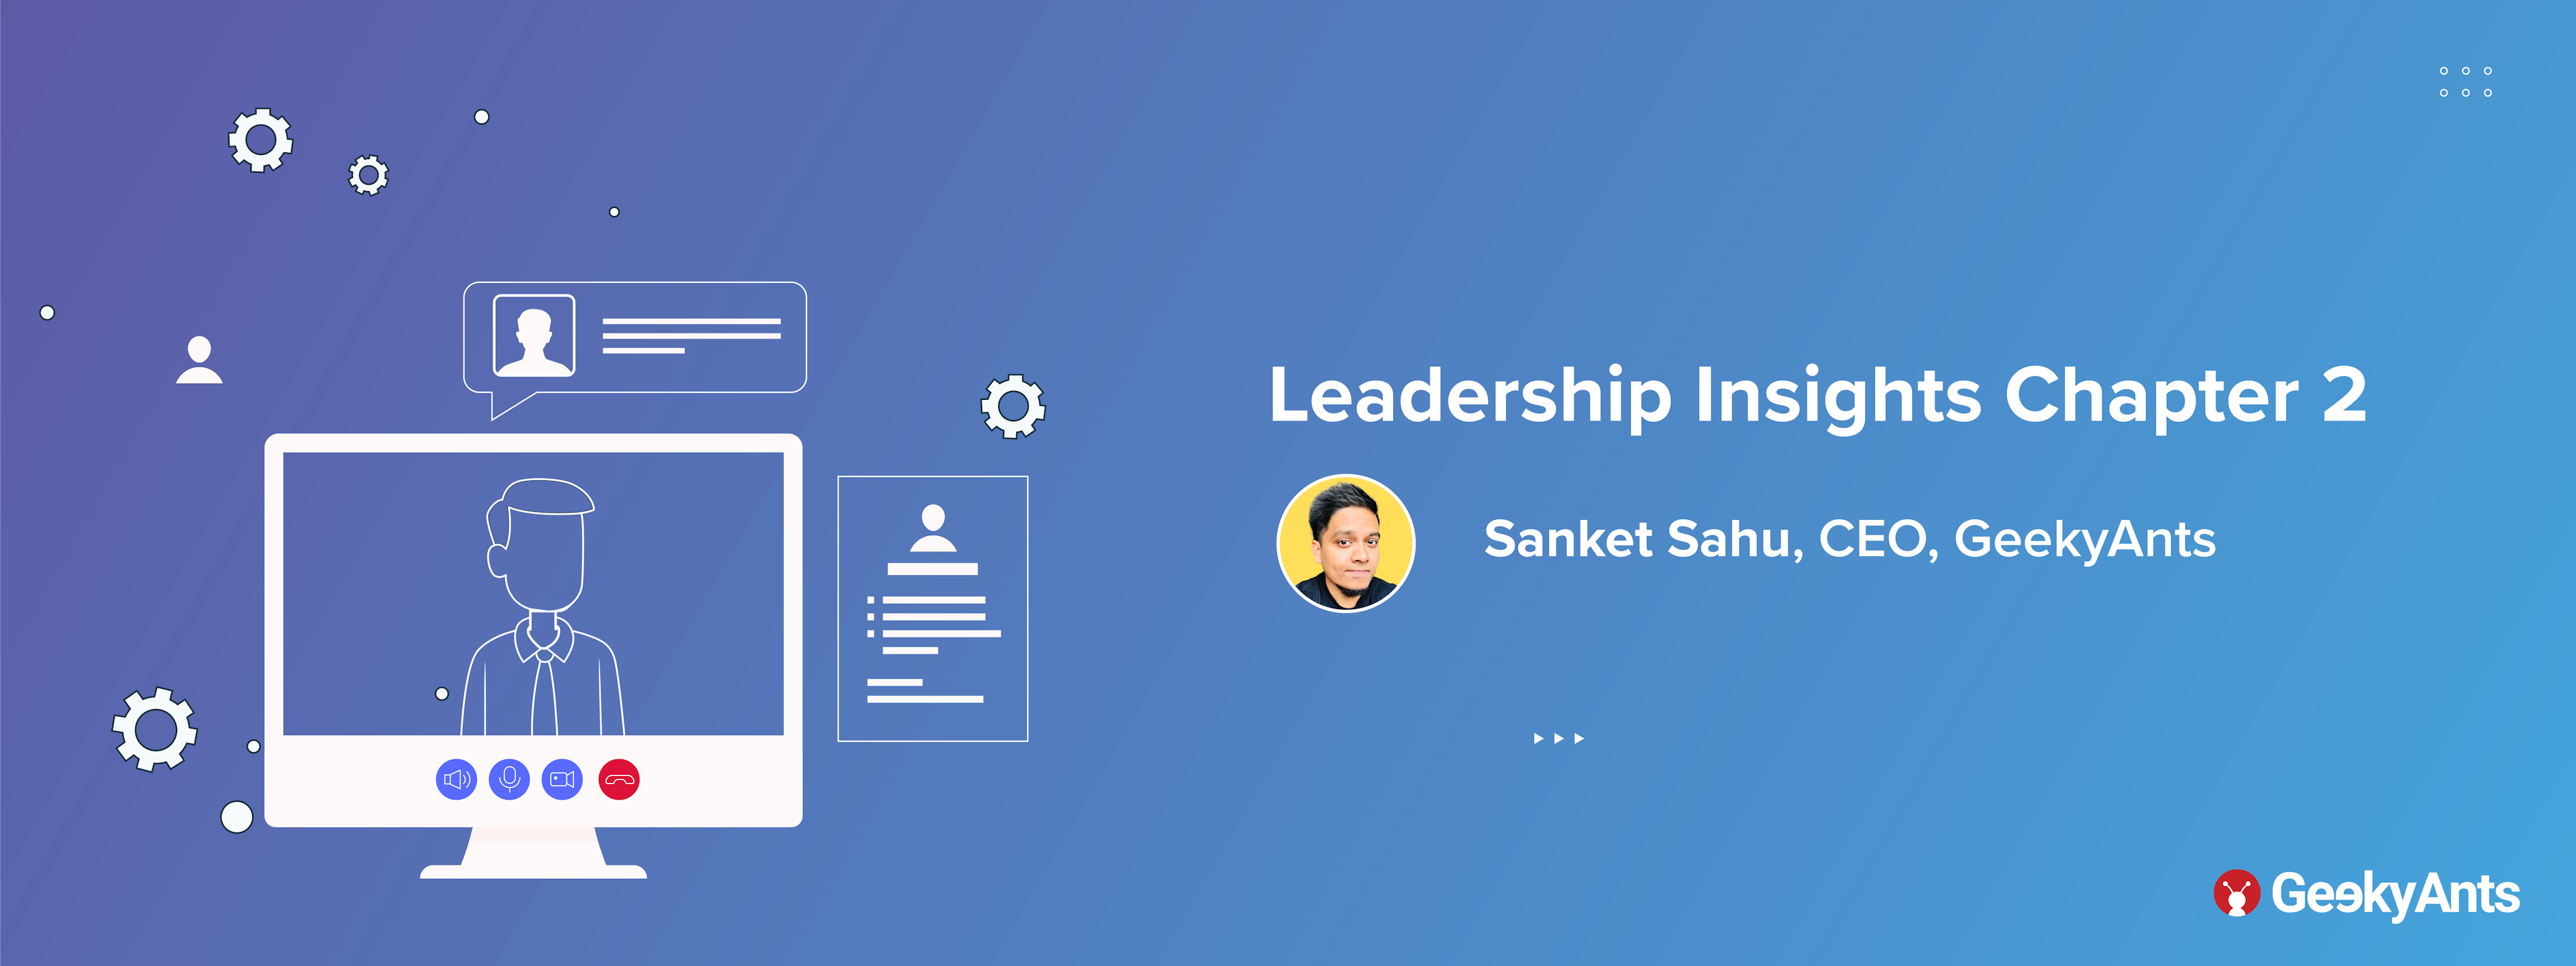 Leadership Insights Chapter 2: Sanket Sahu, CEO, GeekyAnts